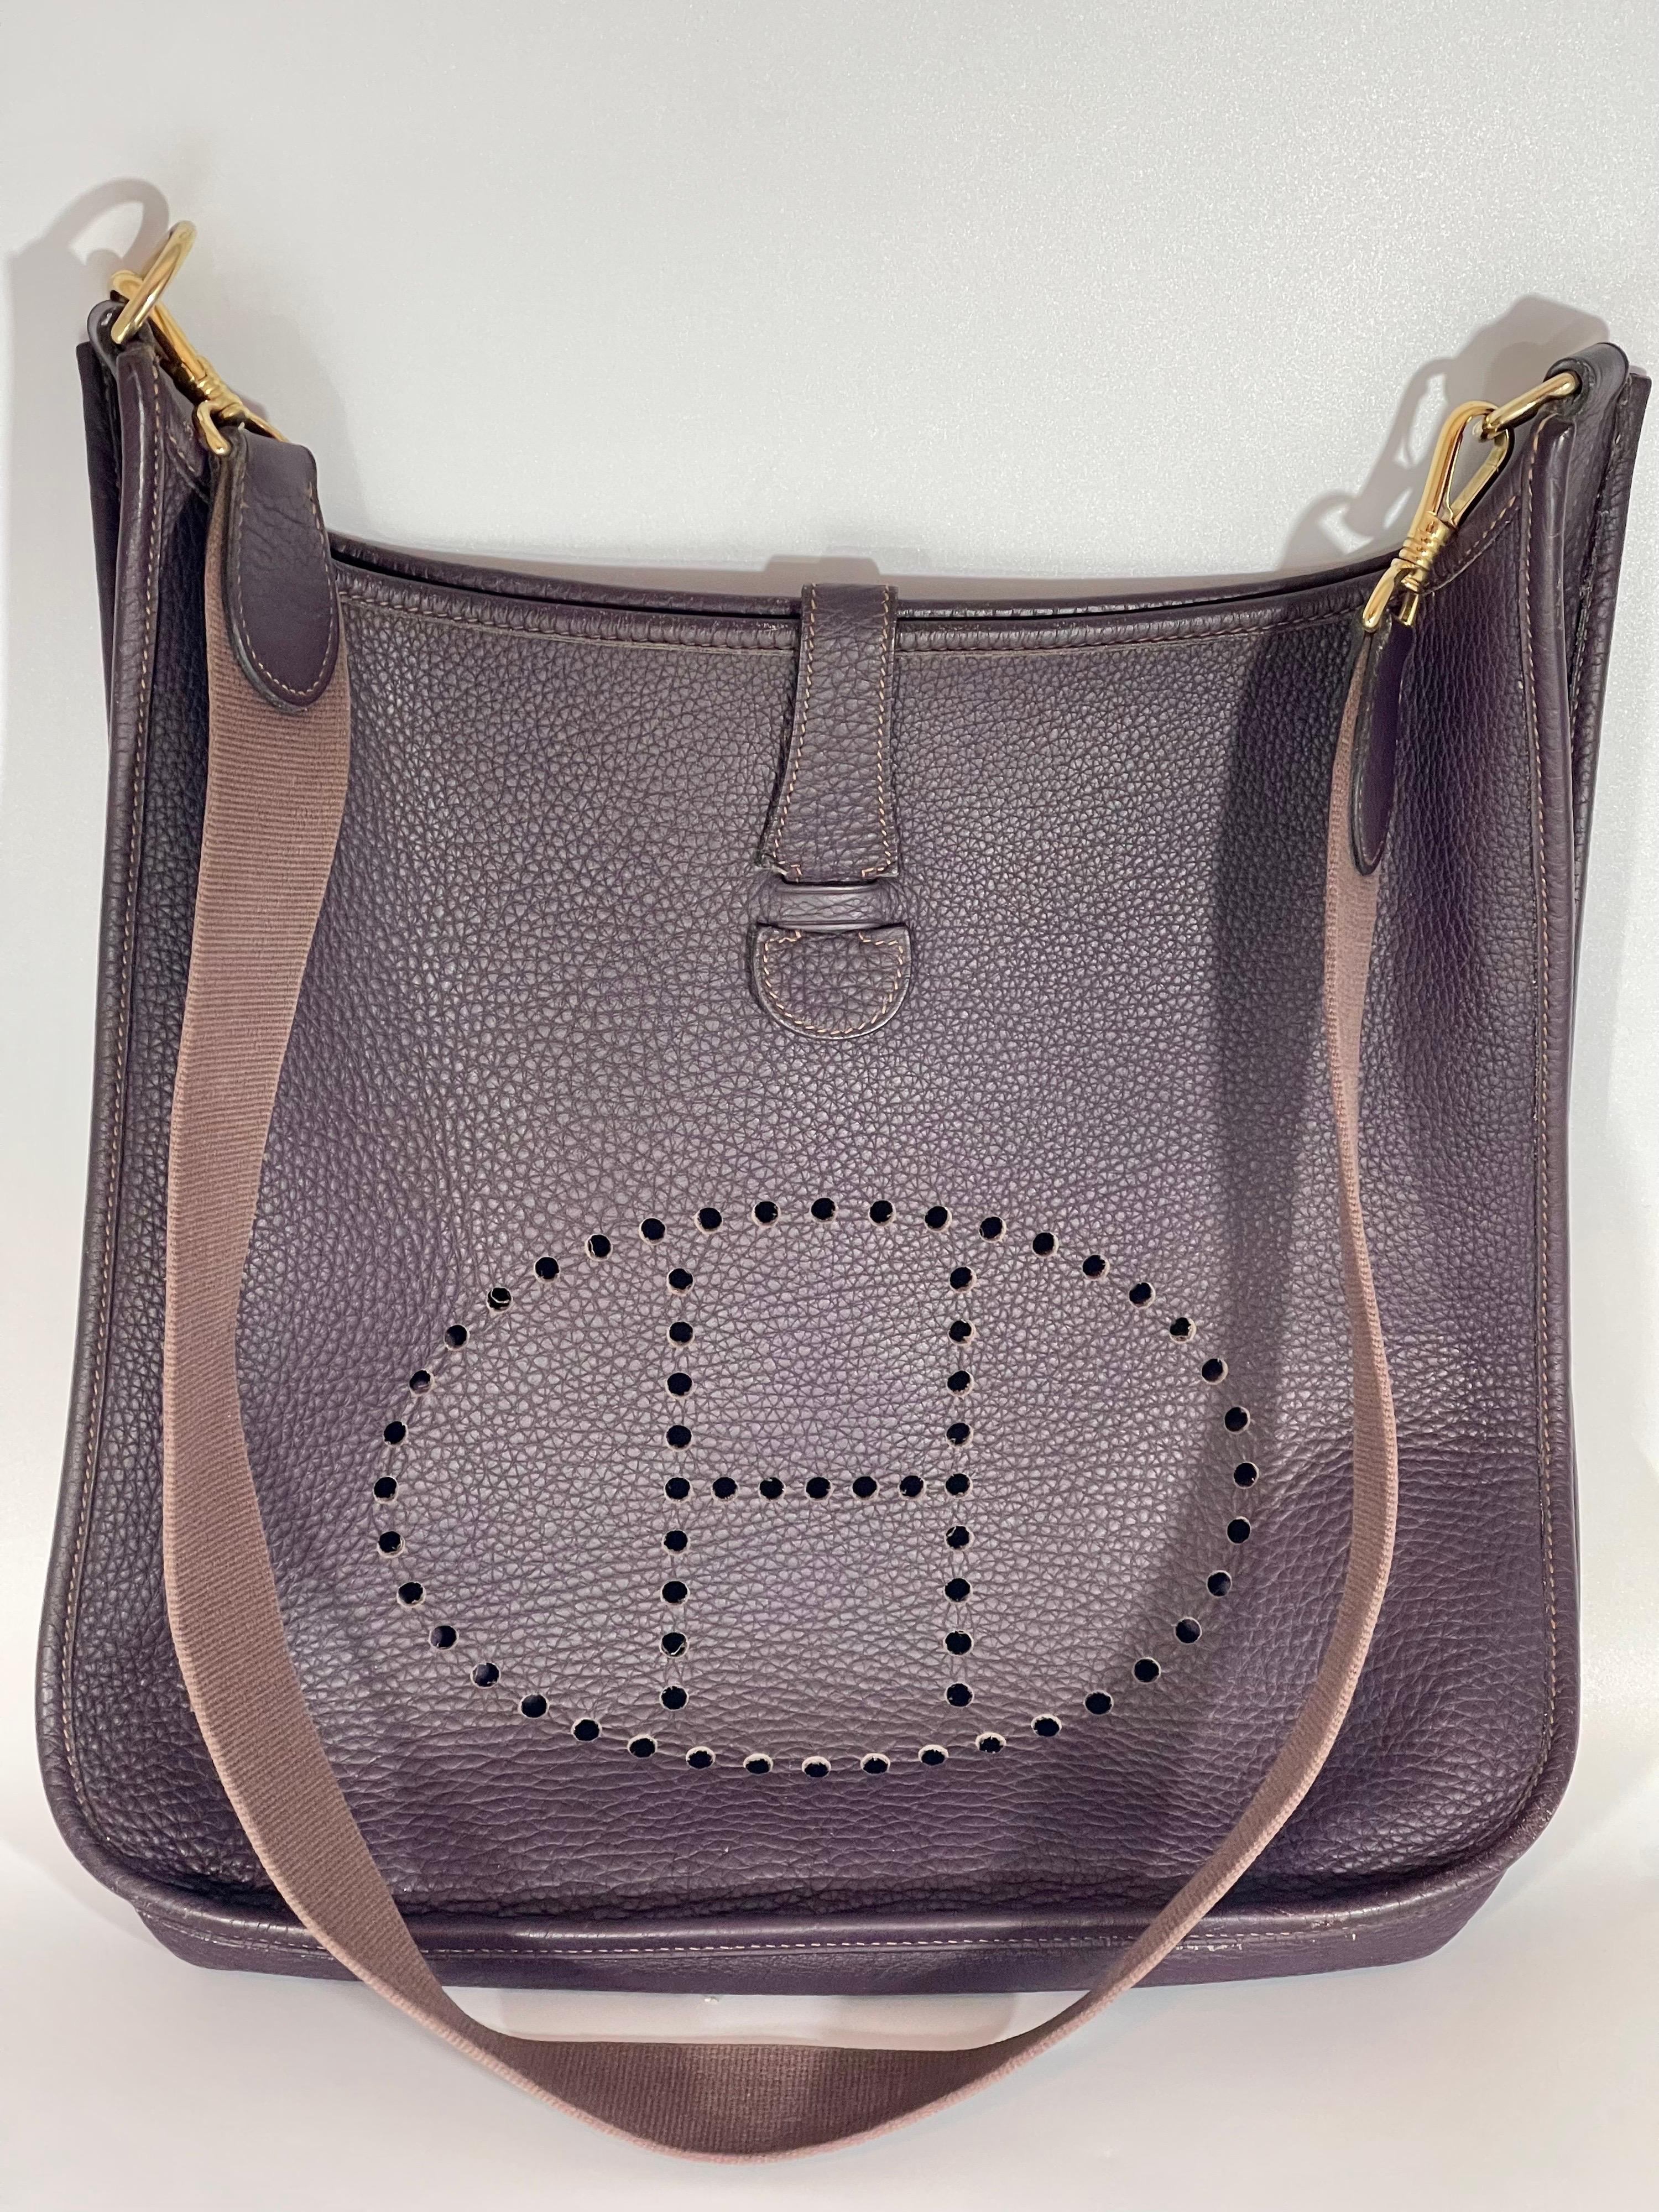 Hermès Evelyne Pm Dark Brown / Chocolate Leather Cross Body Bag Like New en vente 9